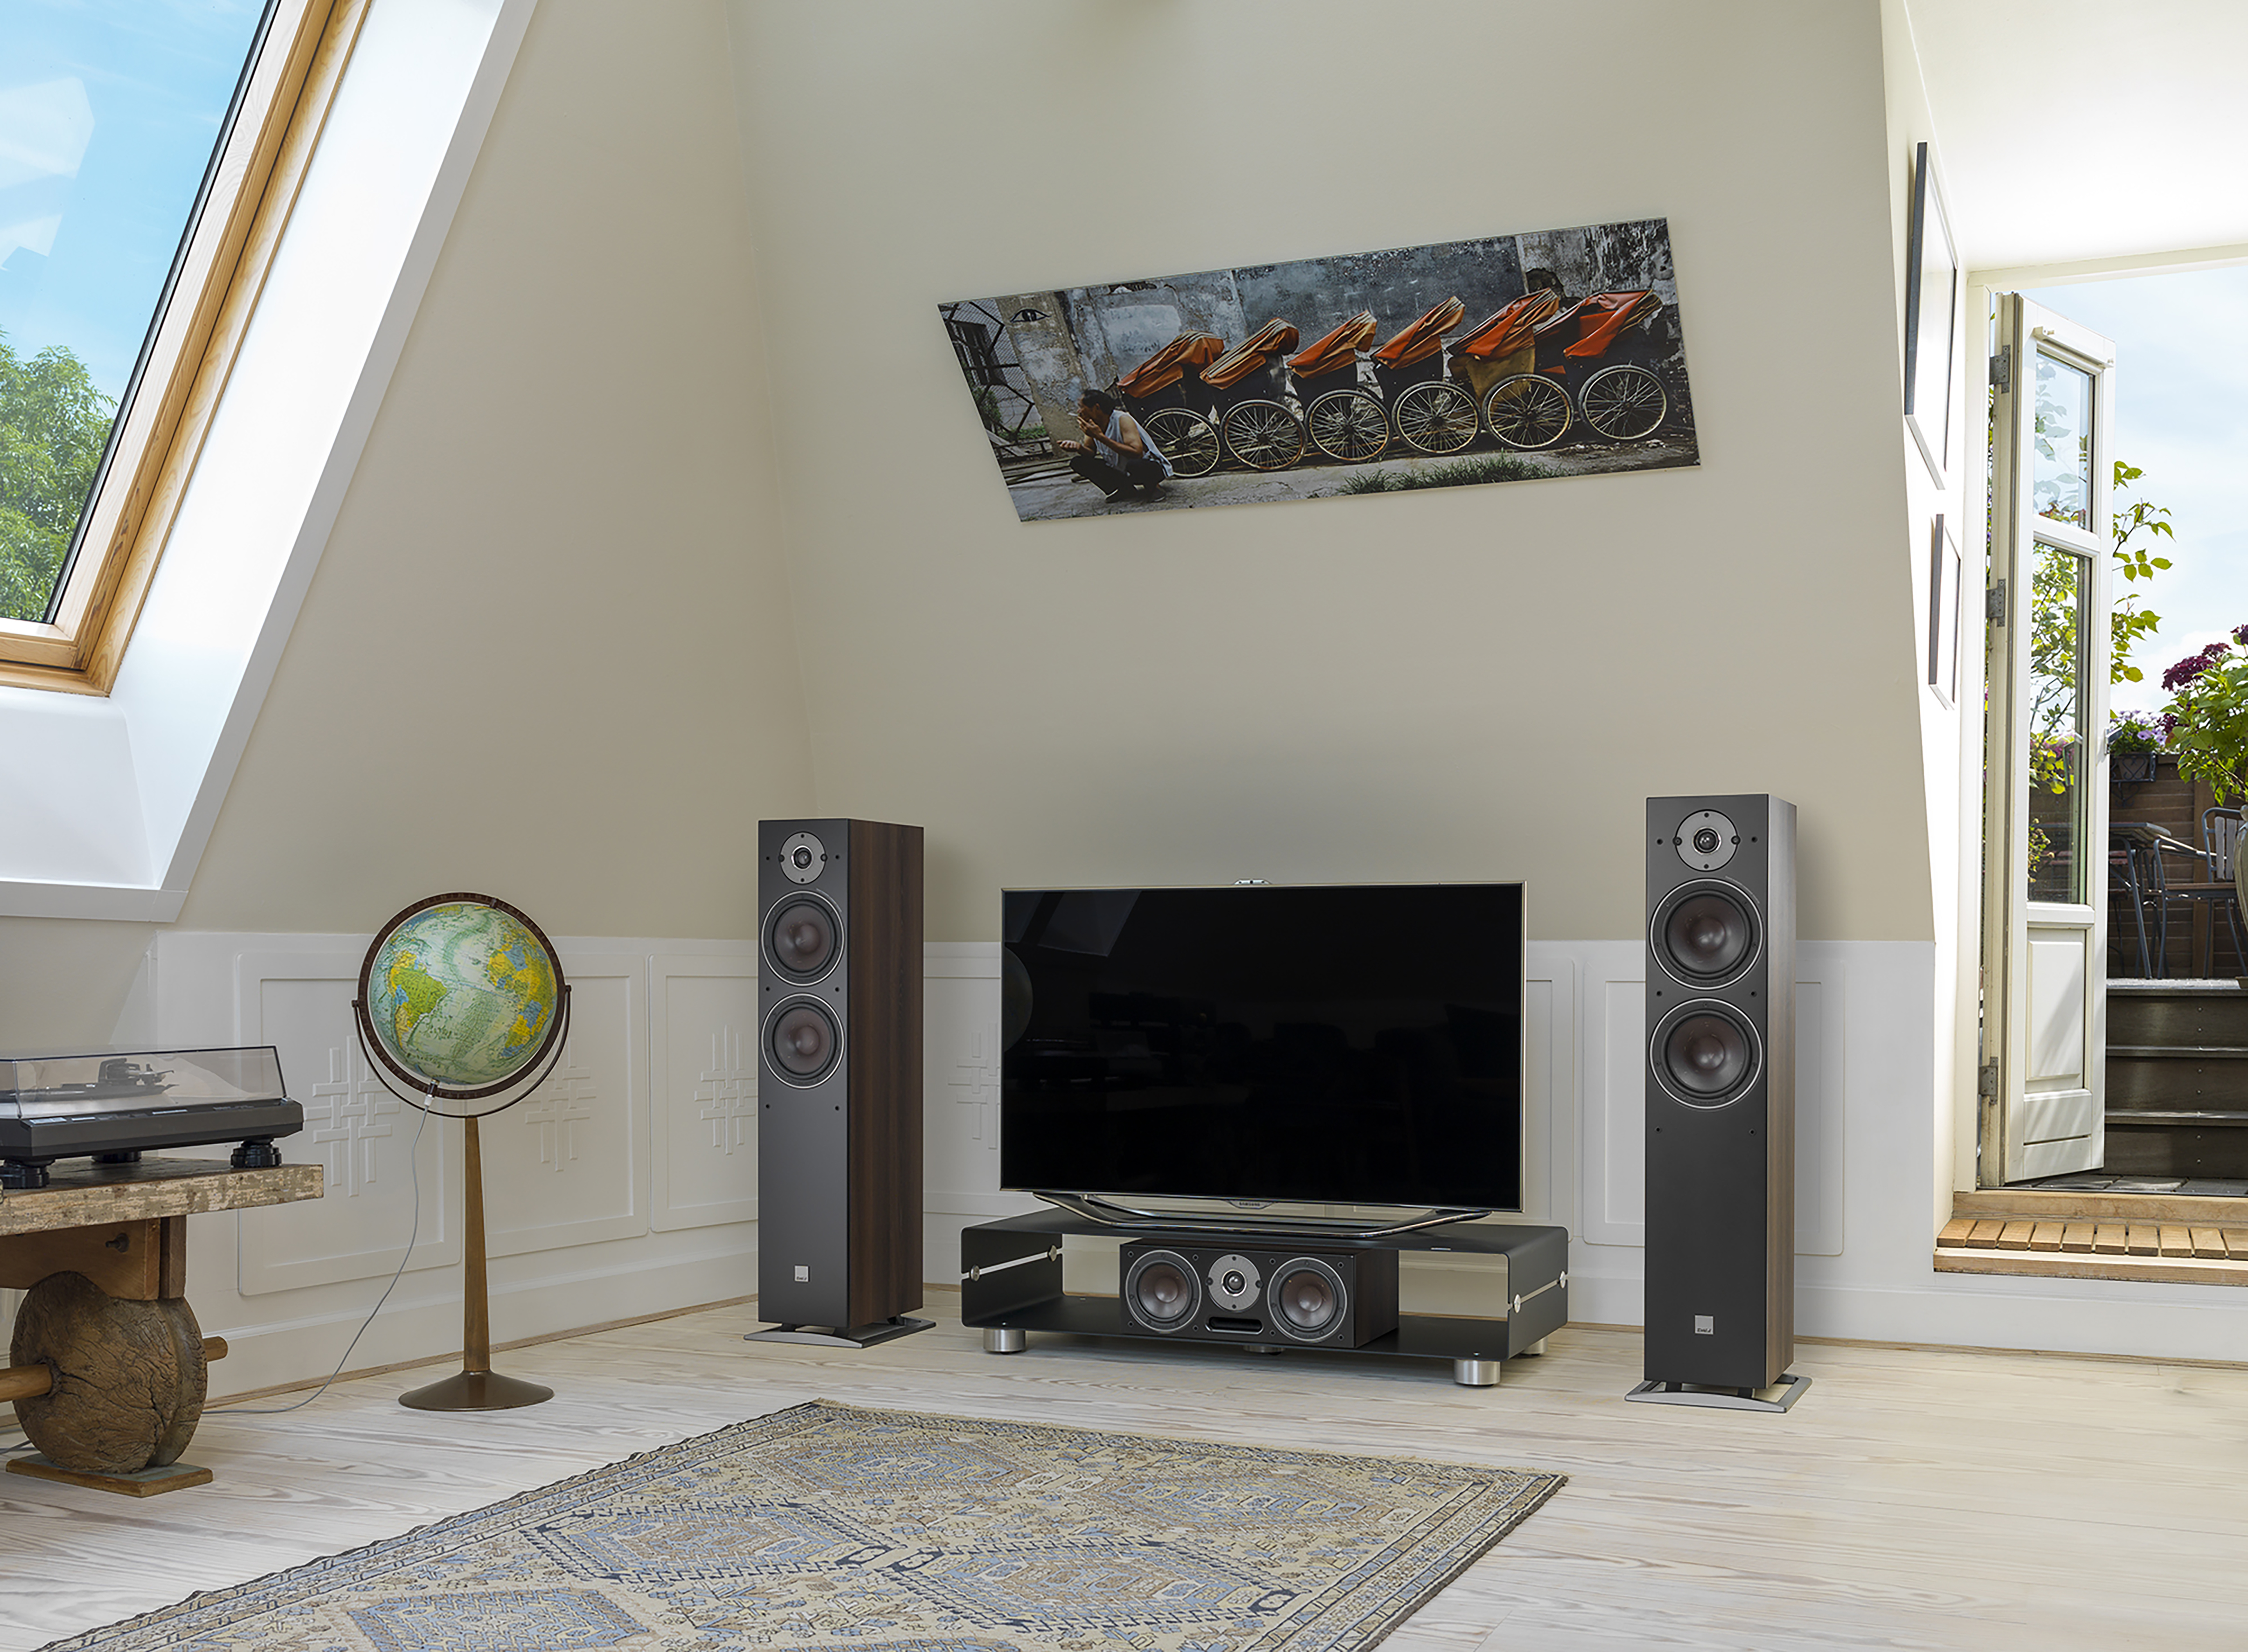 DALI OBERON 7 - redefining affordable audio quality & visual design